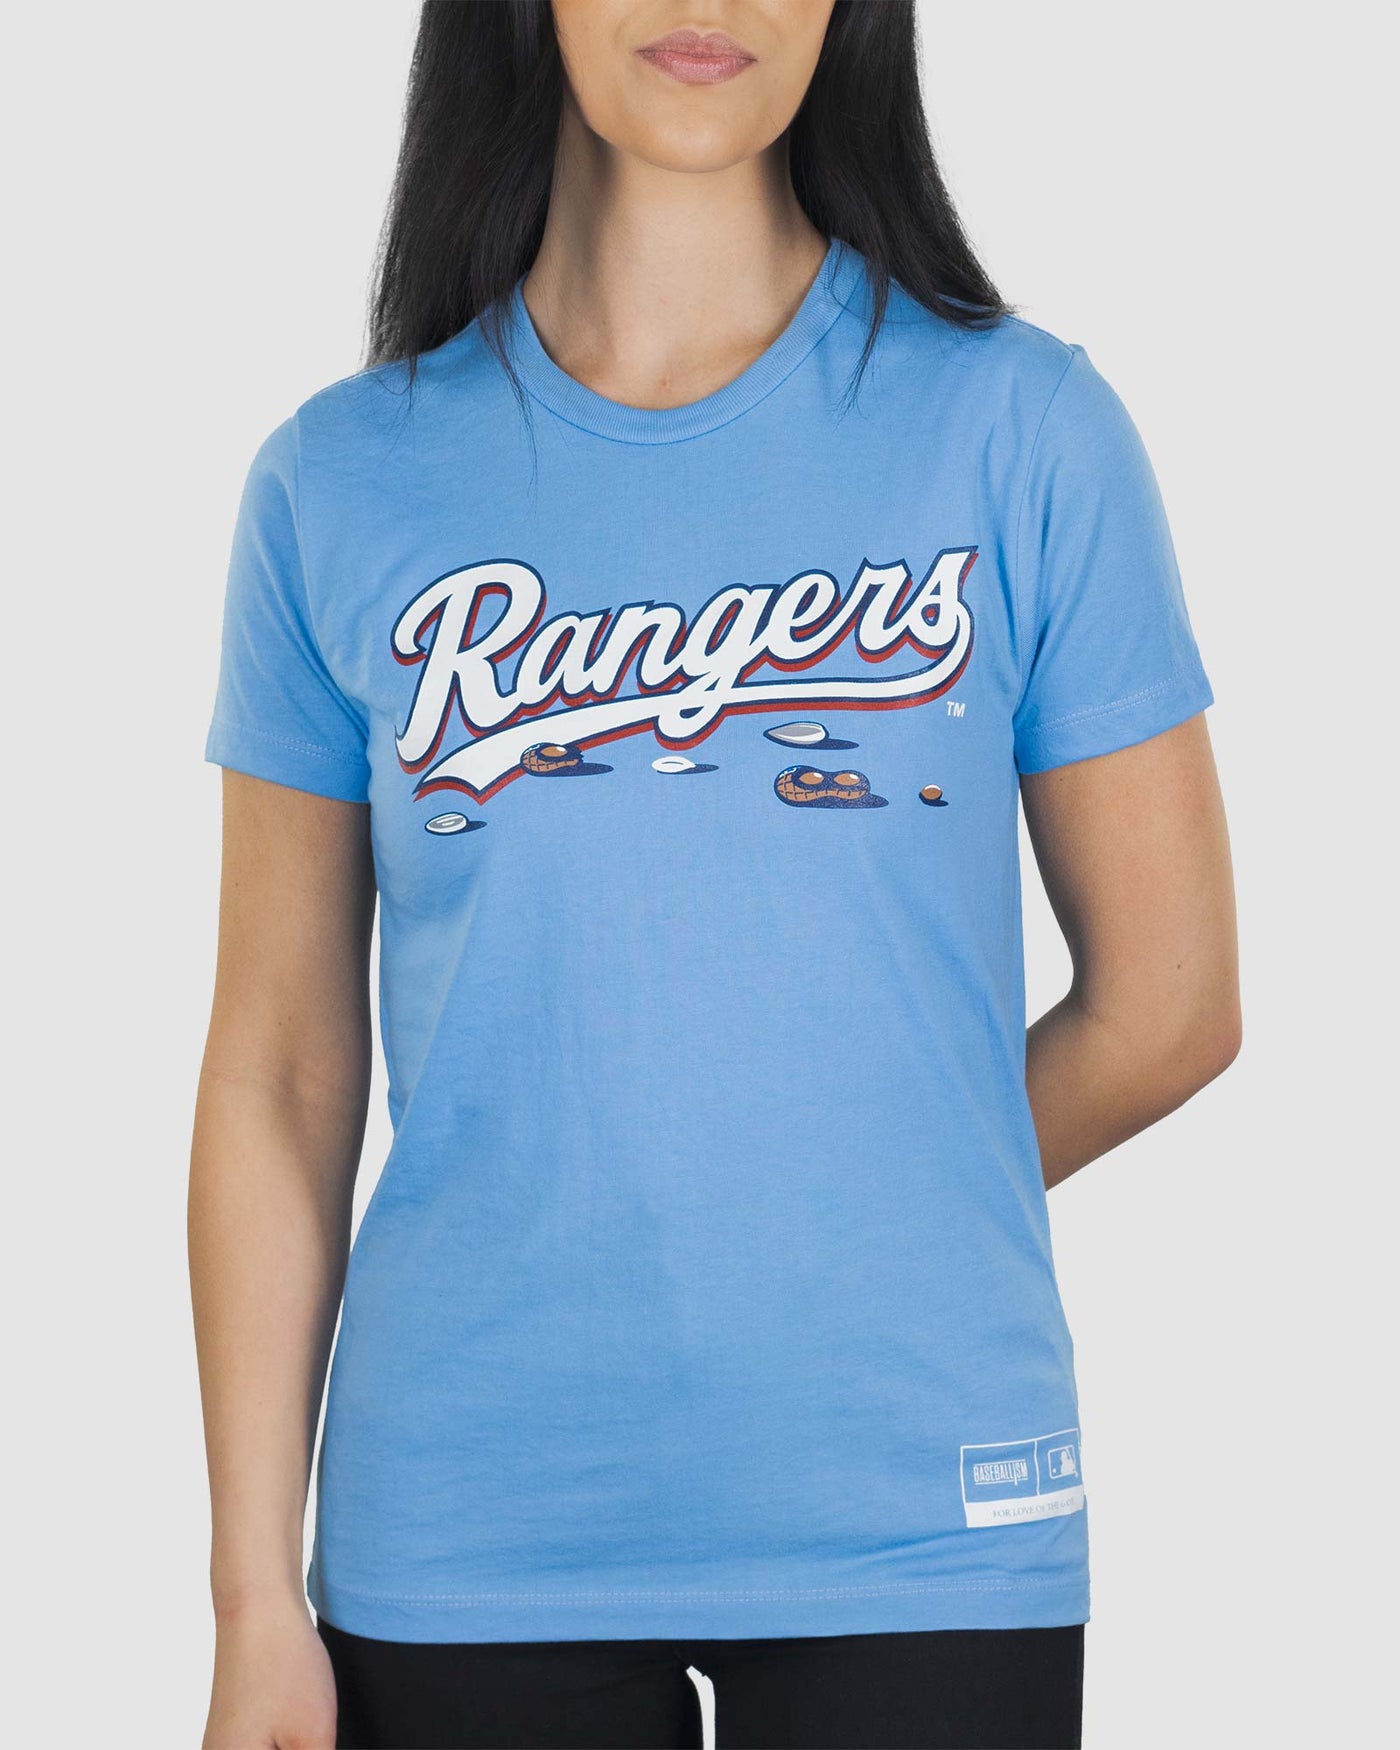 Baseballism Get Your Peanuts! - Texas Rangers 2XL